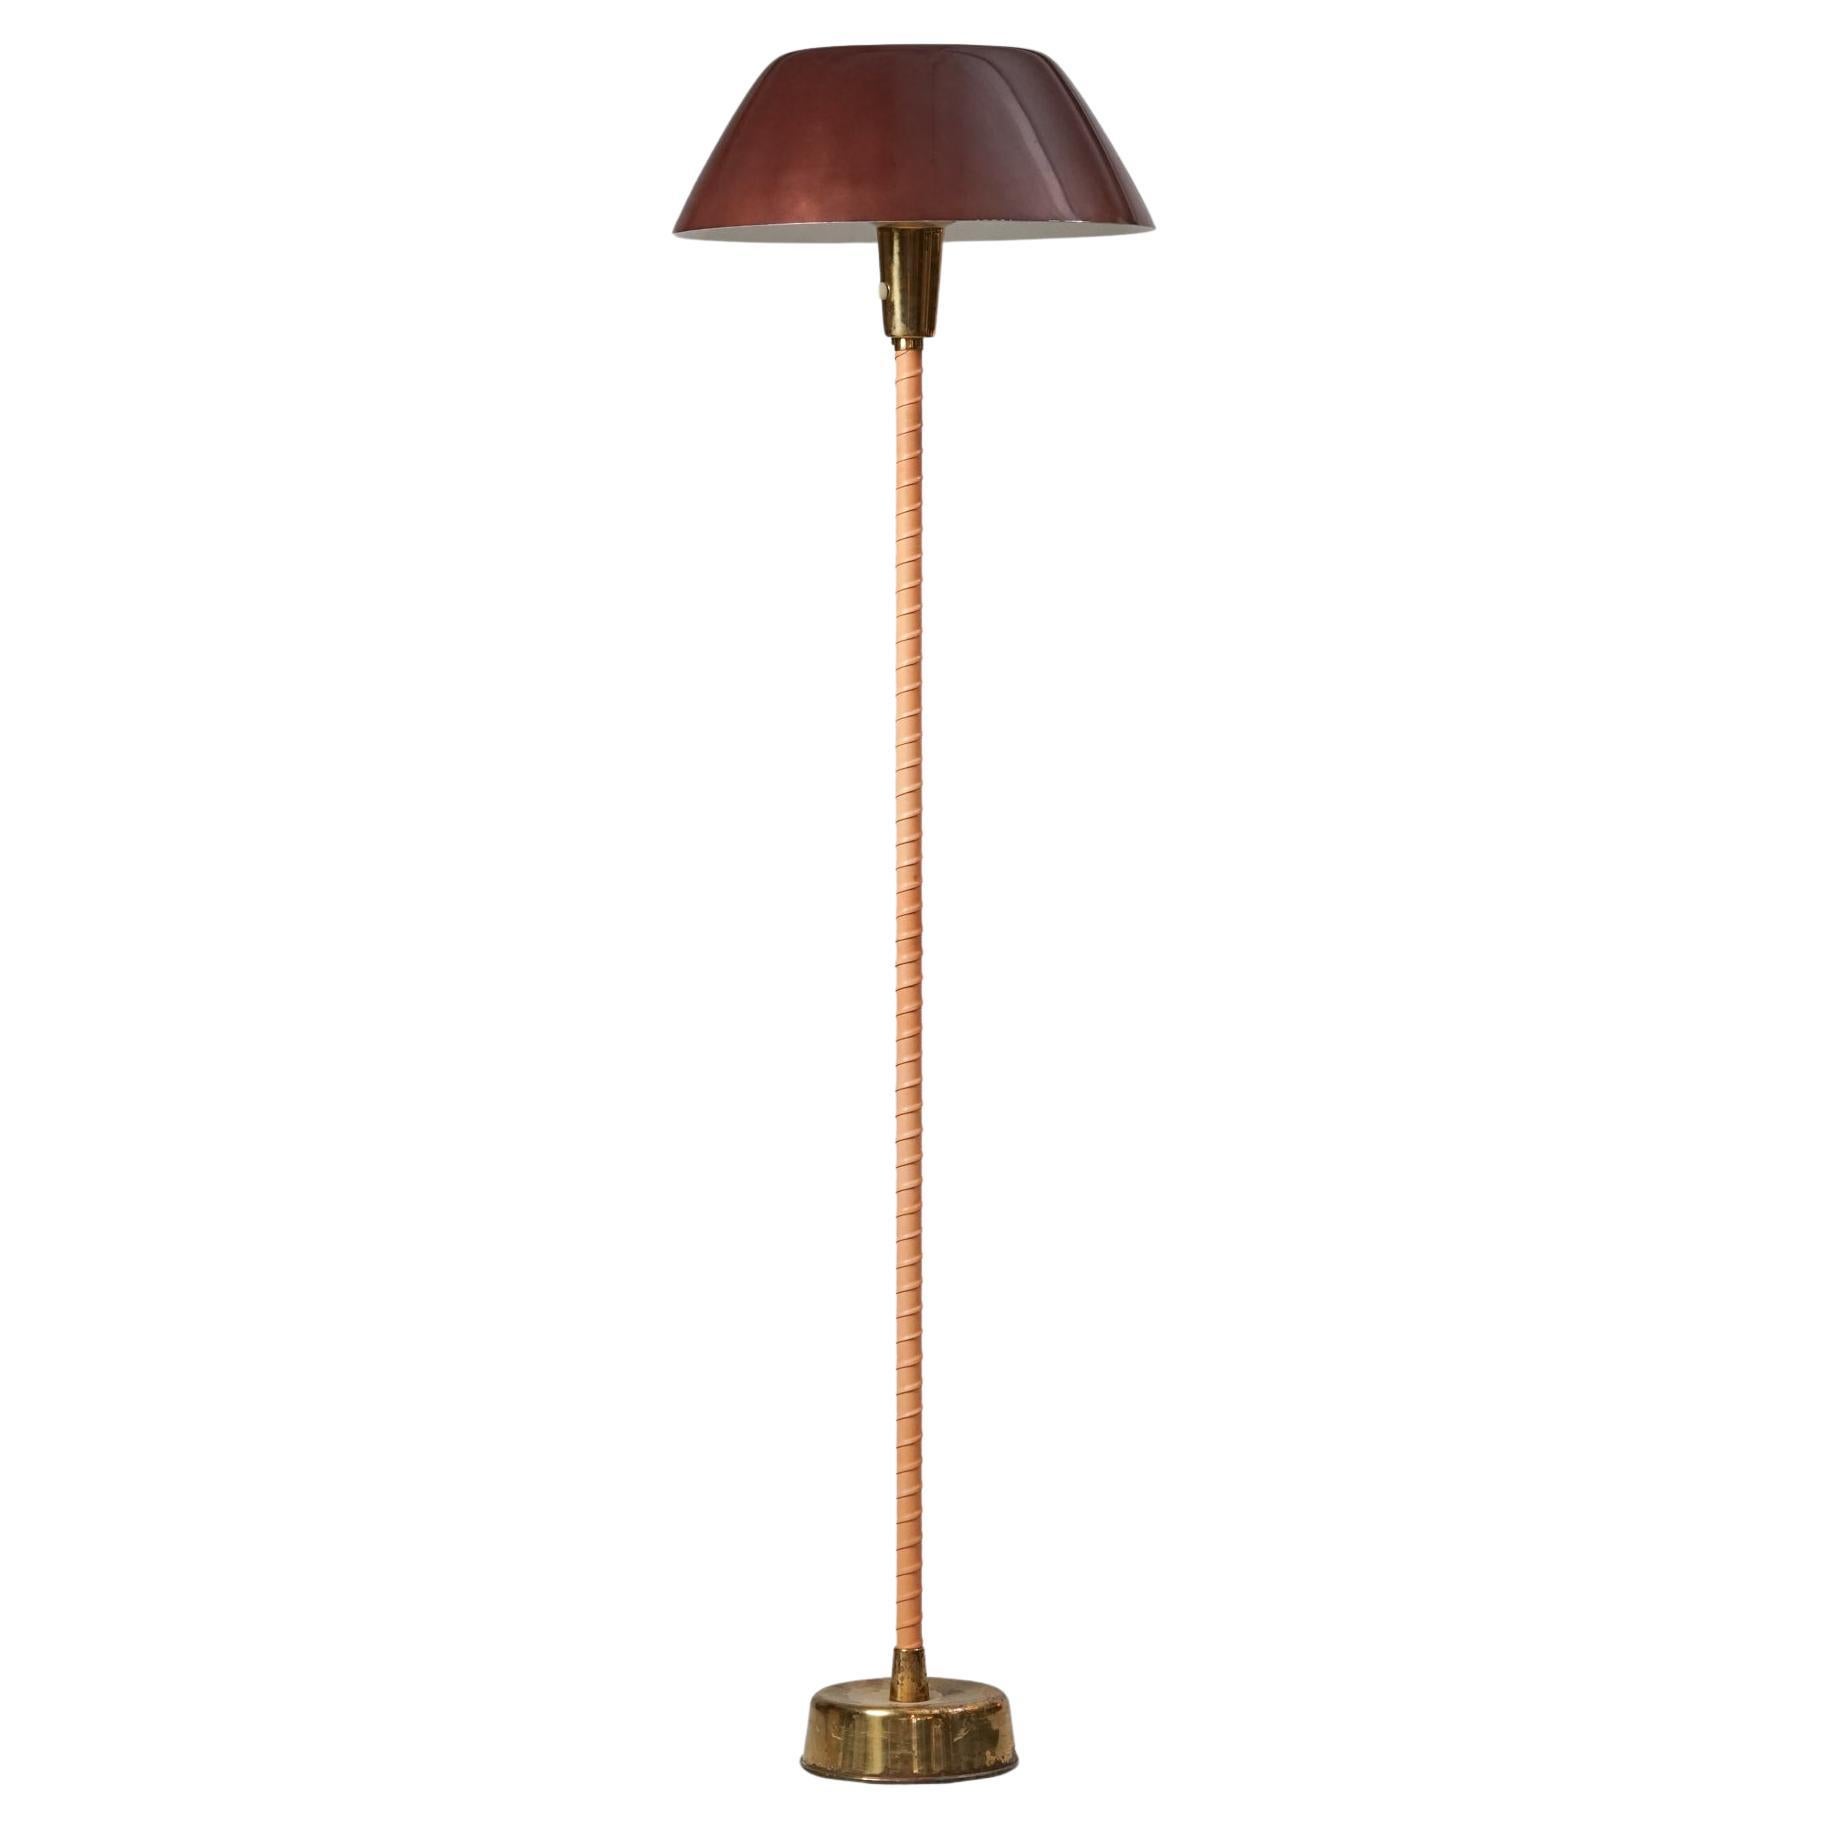  Senator Floor Lamp by Lisa Johansson-Pape for Orno, 1950s